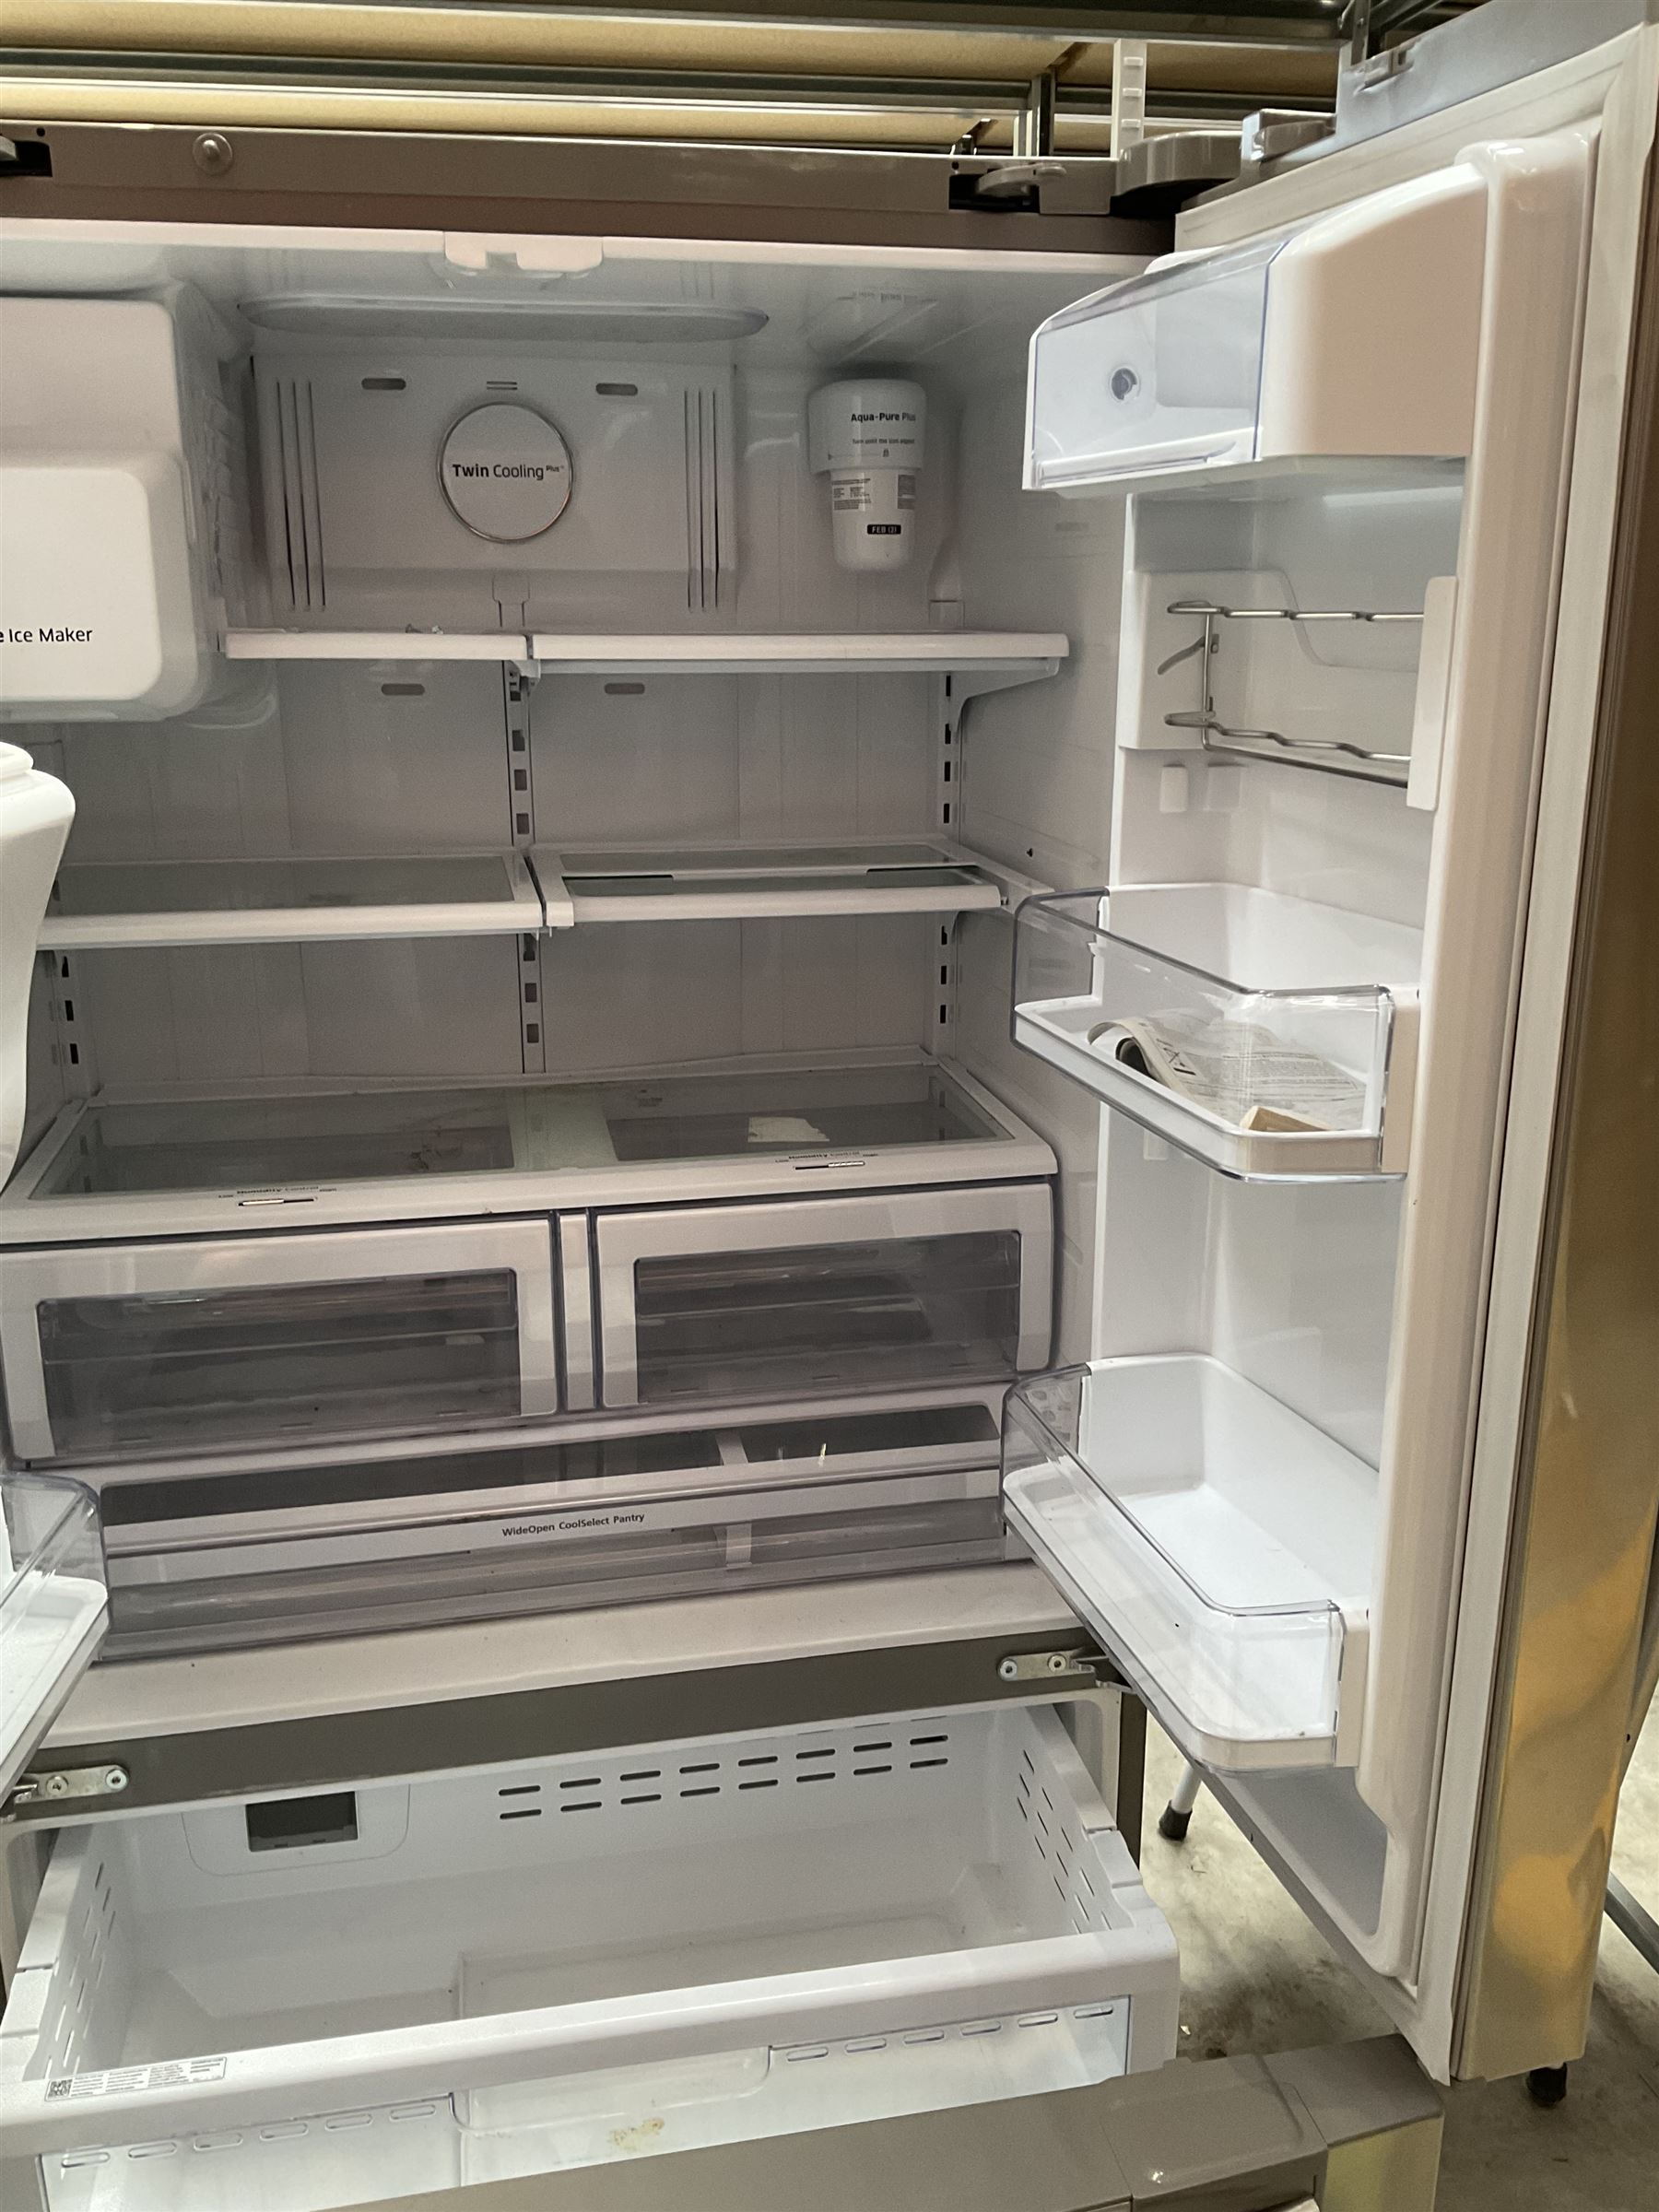 Samsung RFG23UERS American style fridge freezer with ice maker - Image 3 of 5